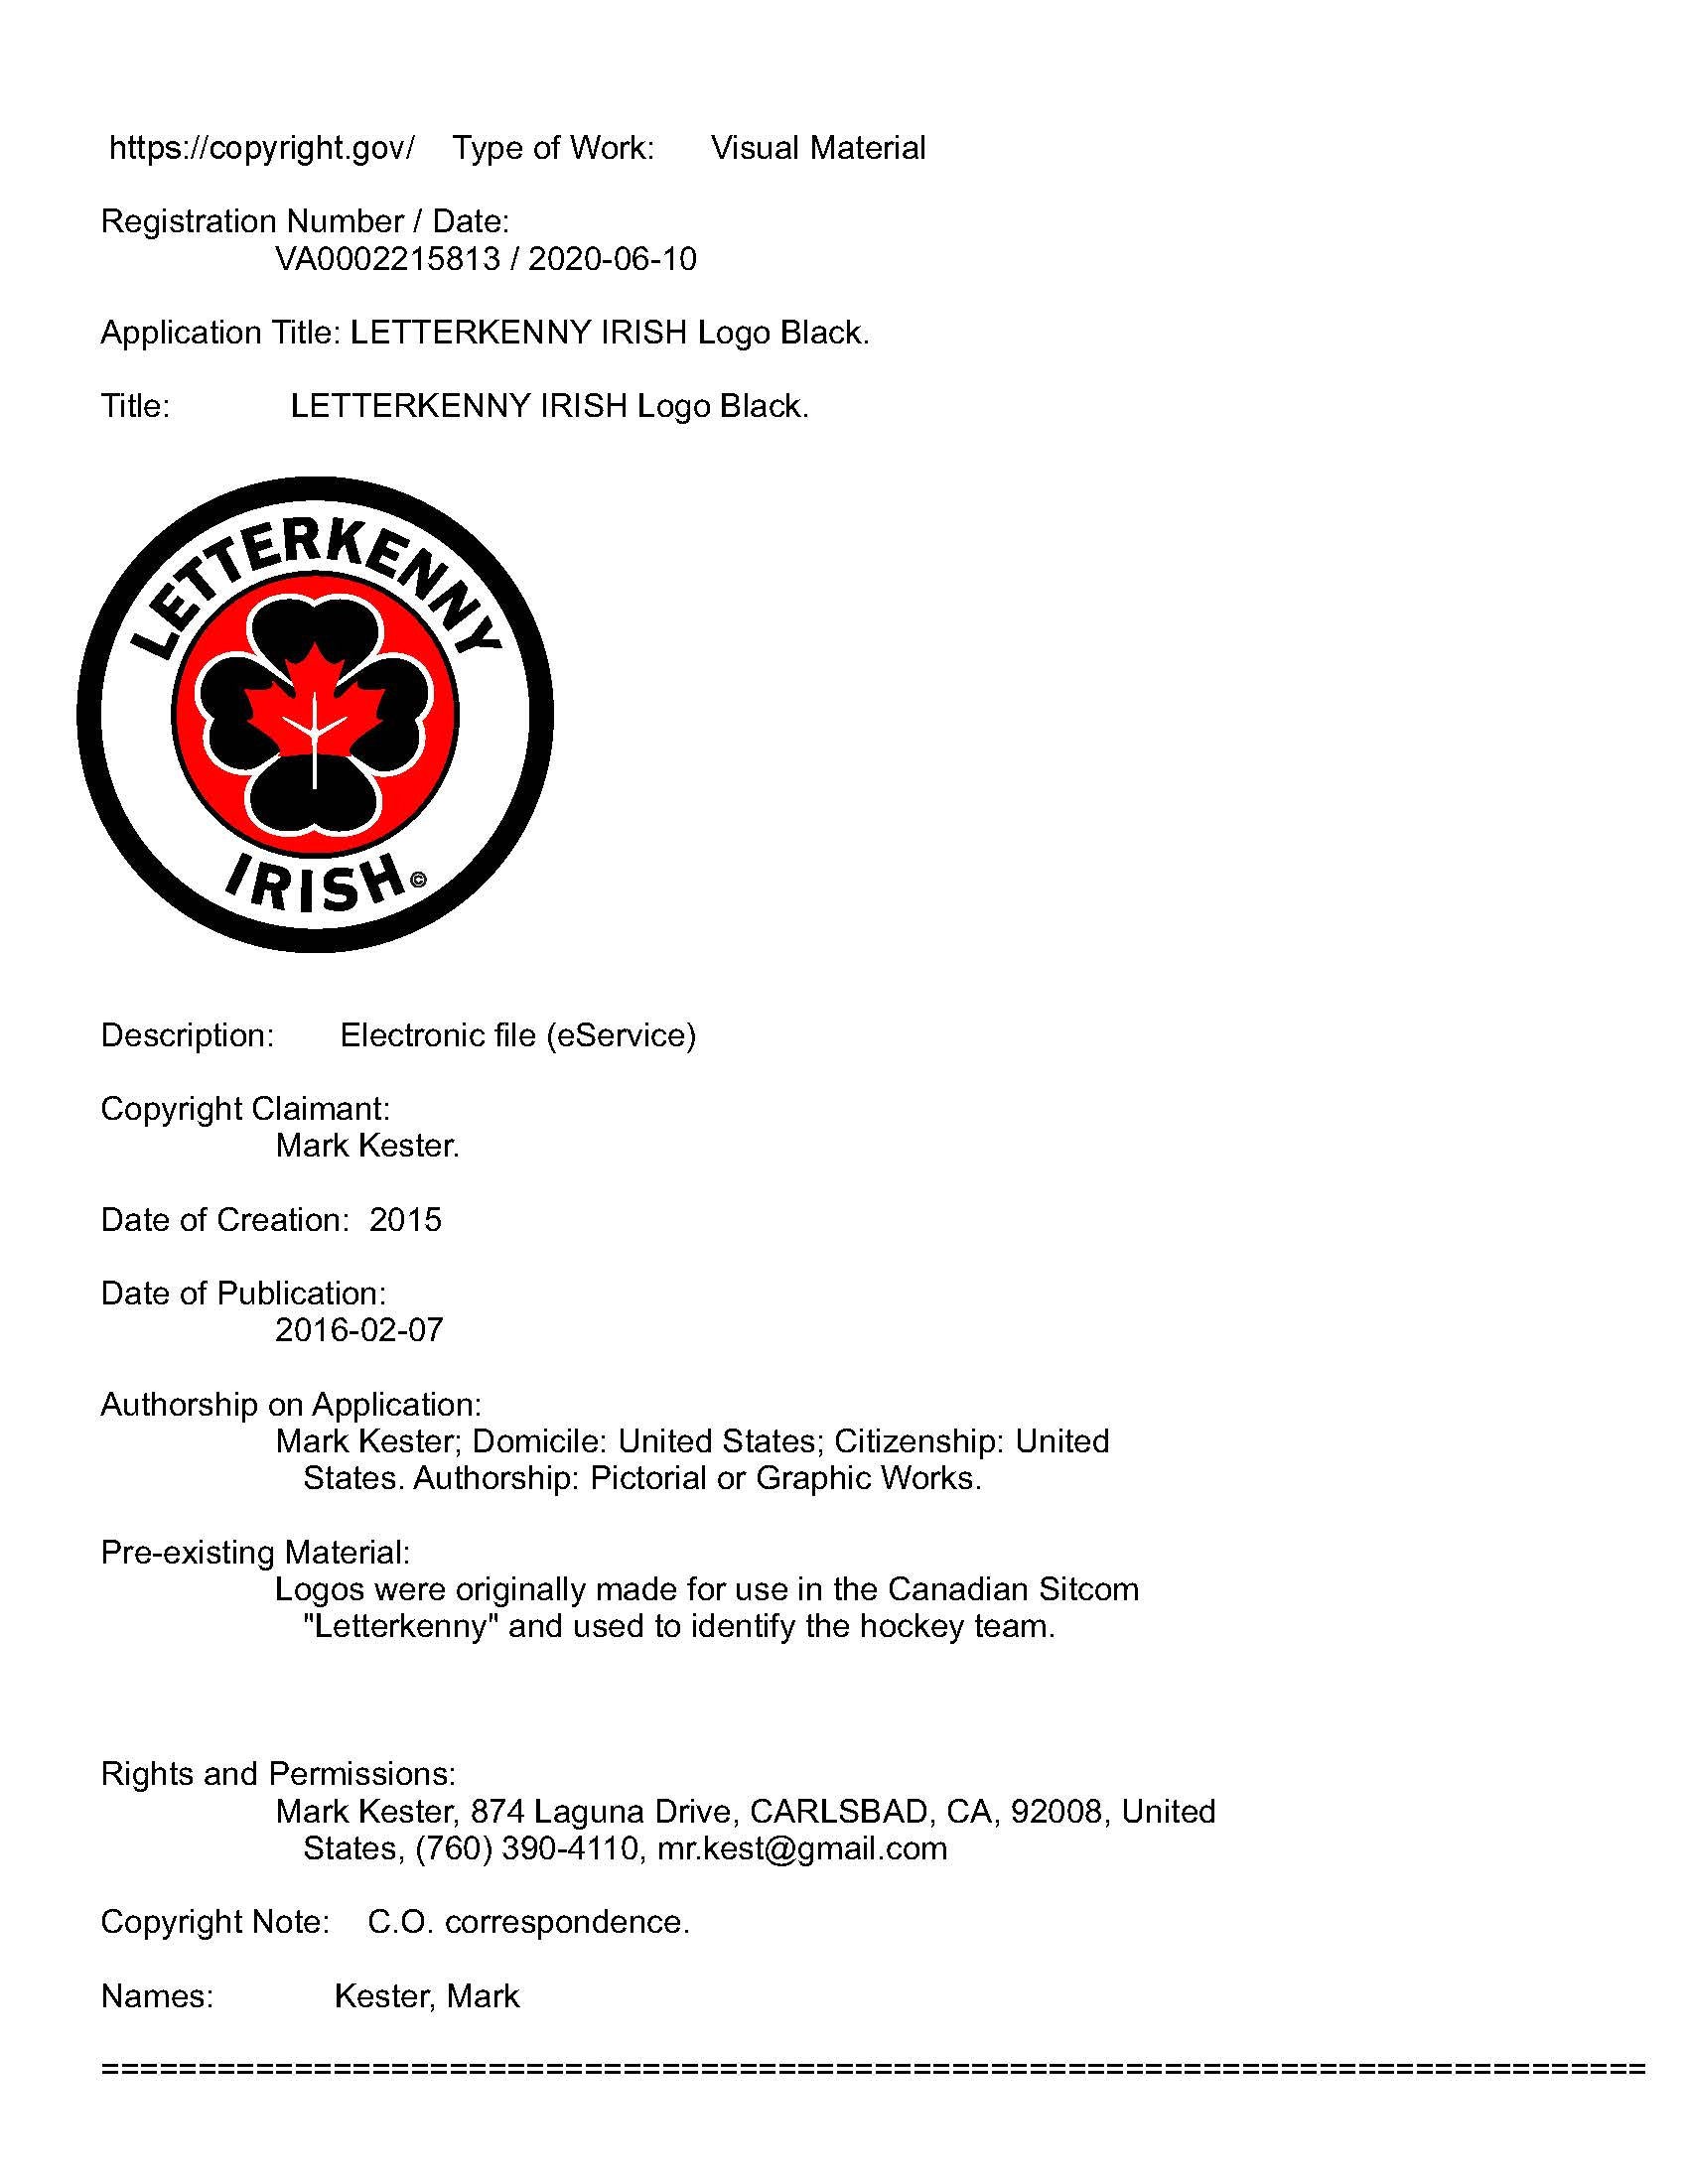 Letterkenny Irish Away Personalized Hockey Jersey - LIMITED EDITION